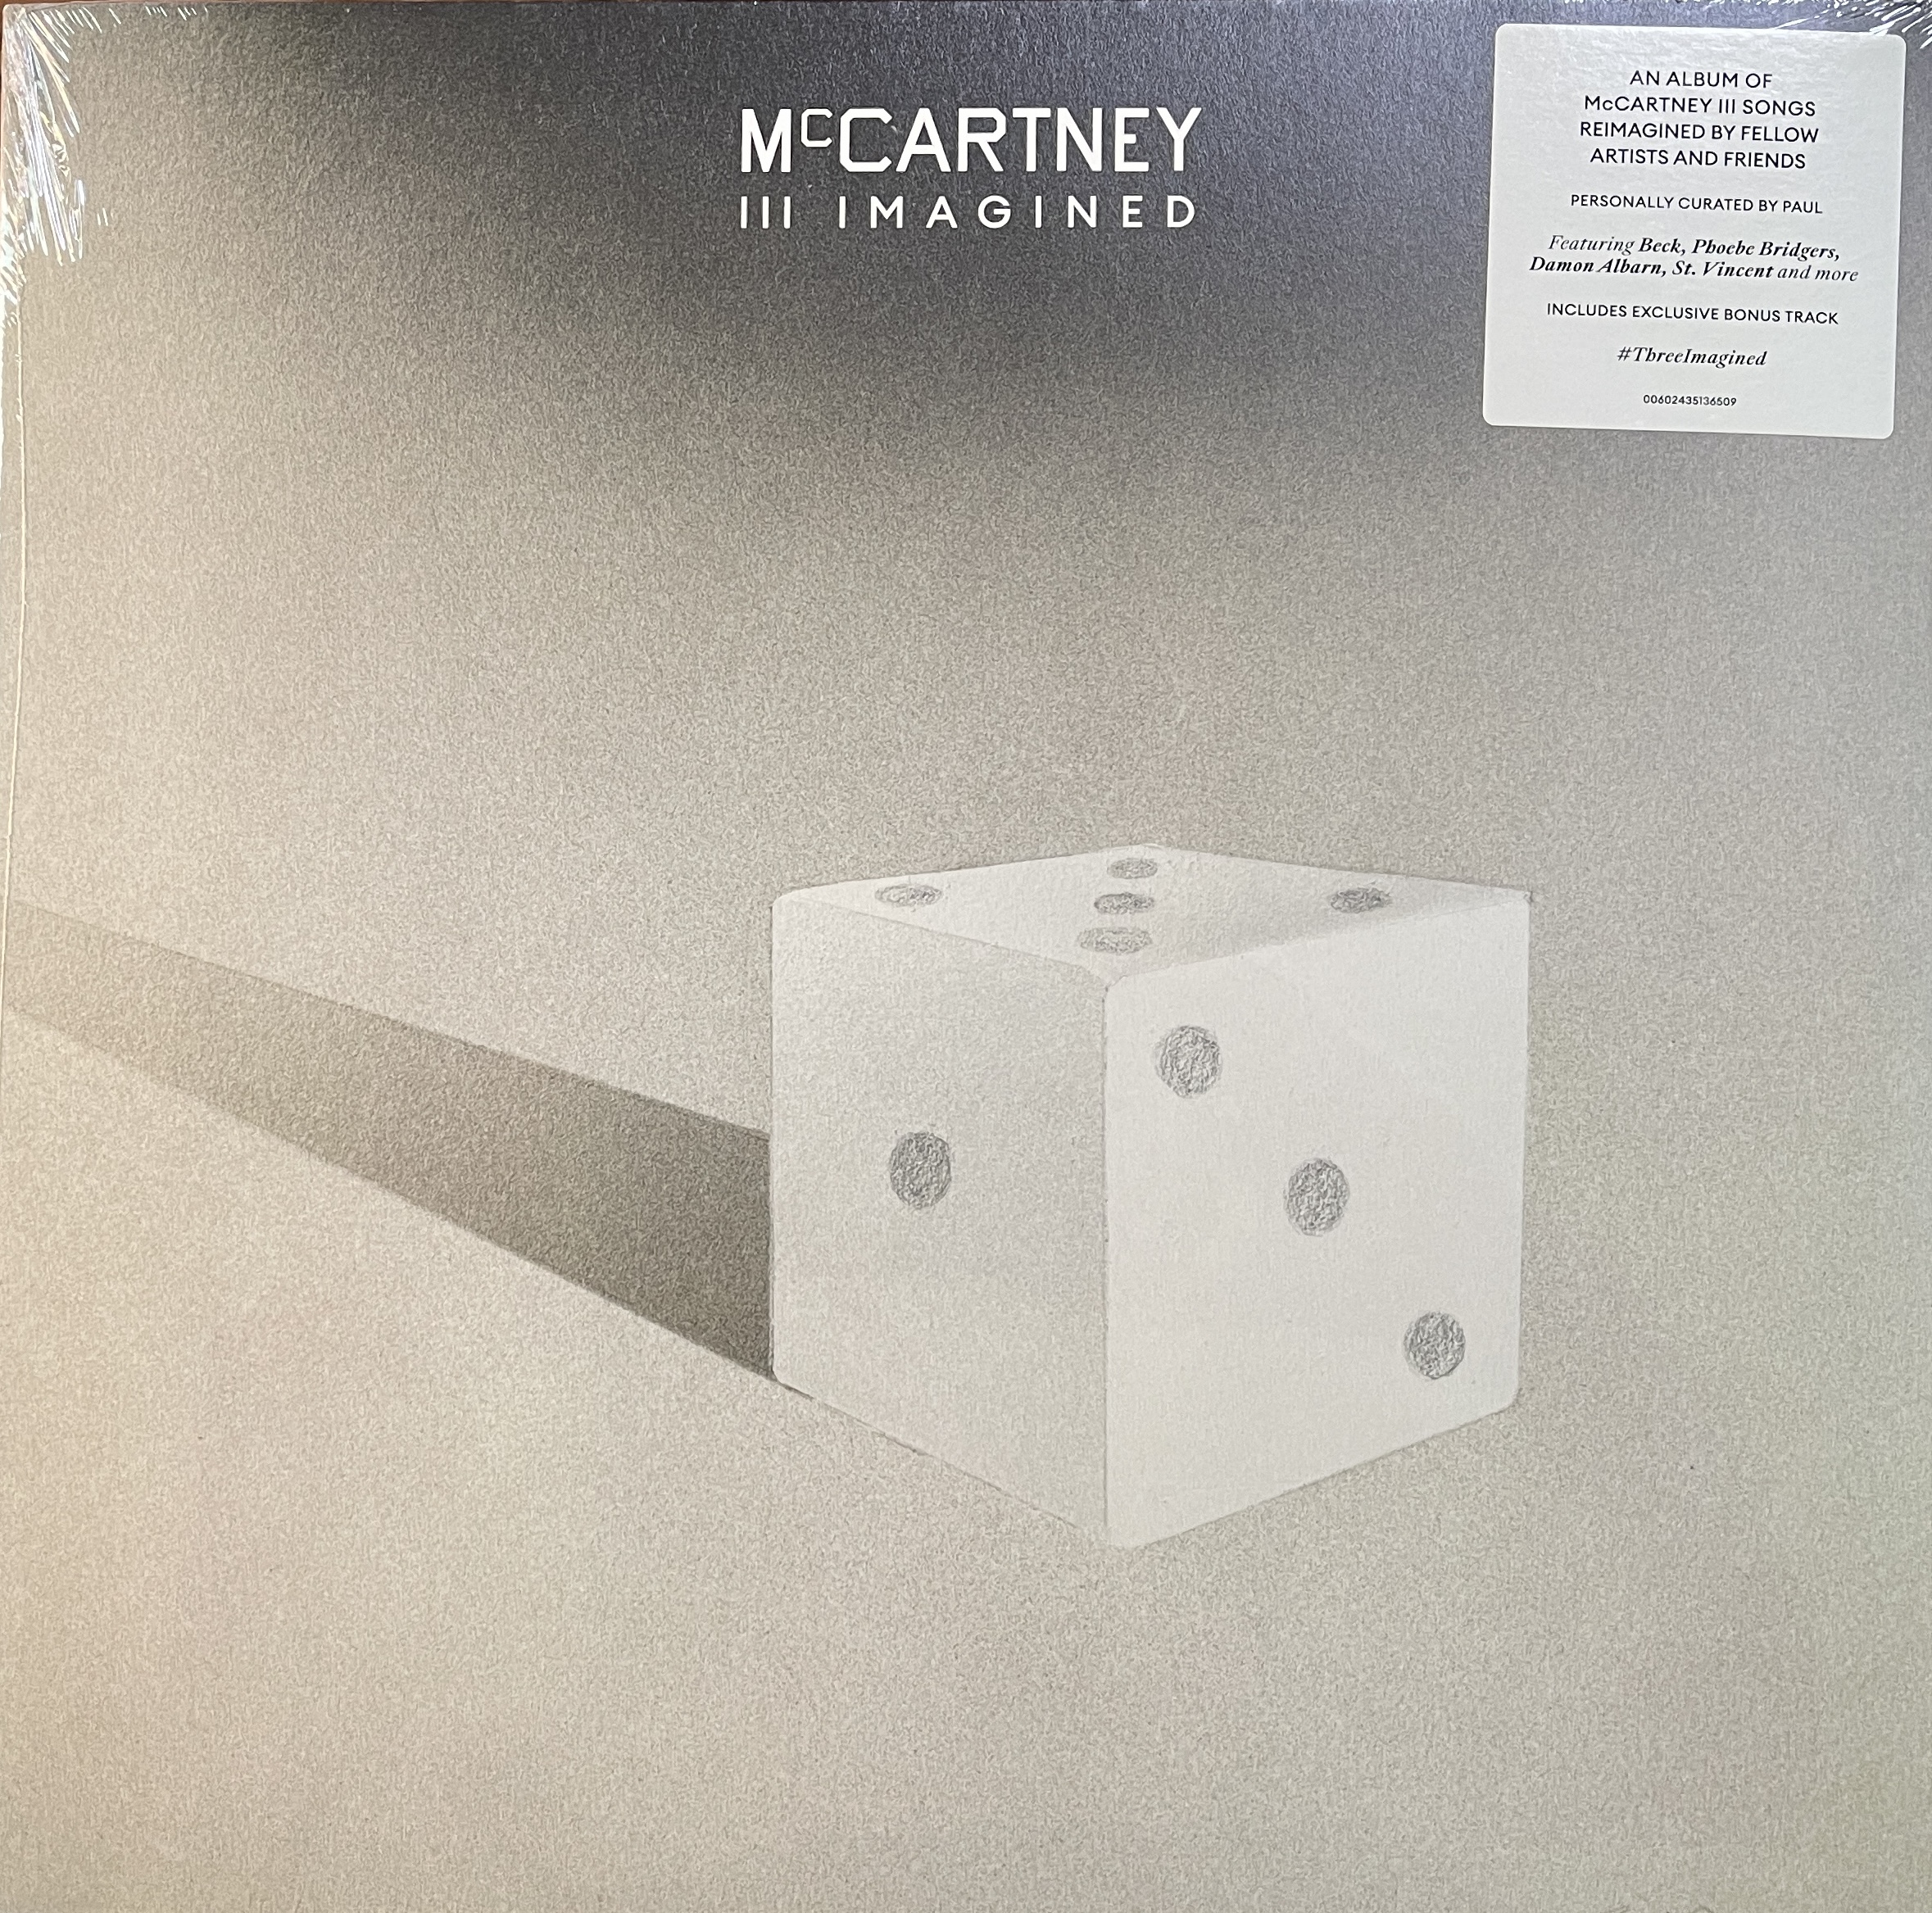 виниловая пластинка McCartney III Imagined (2 LP)